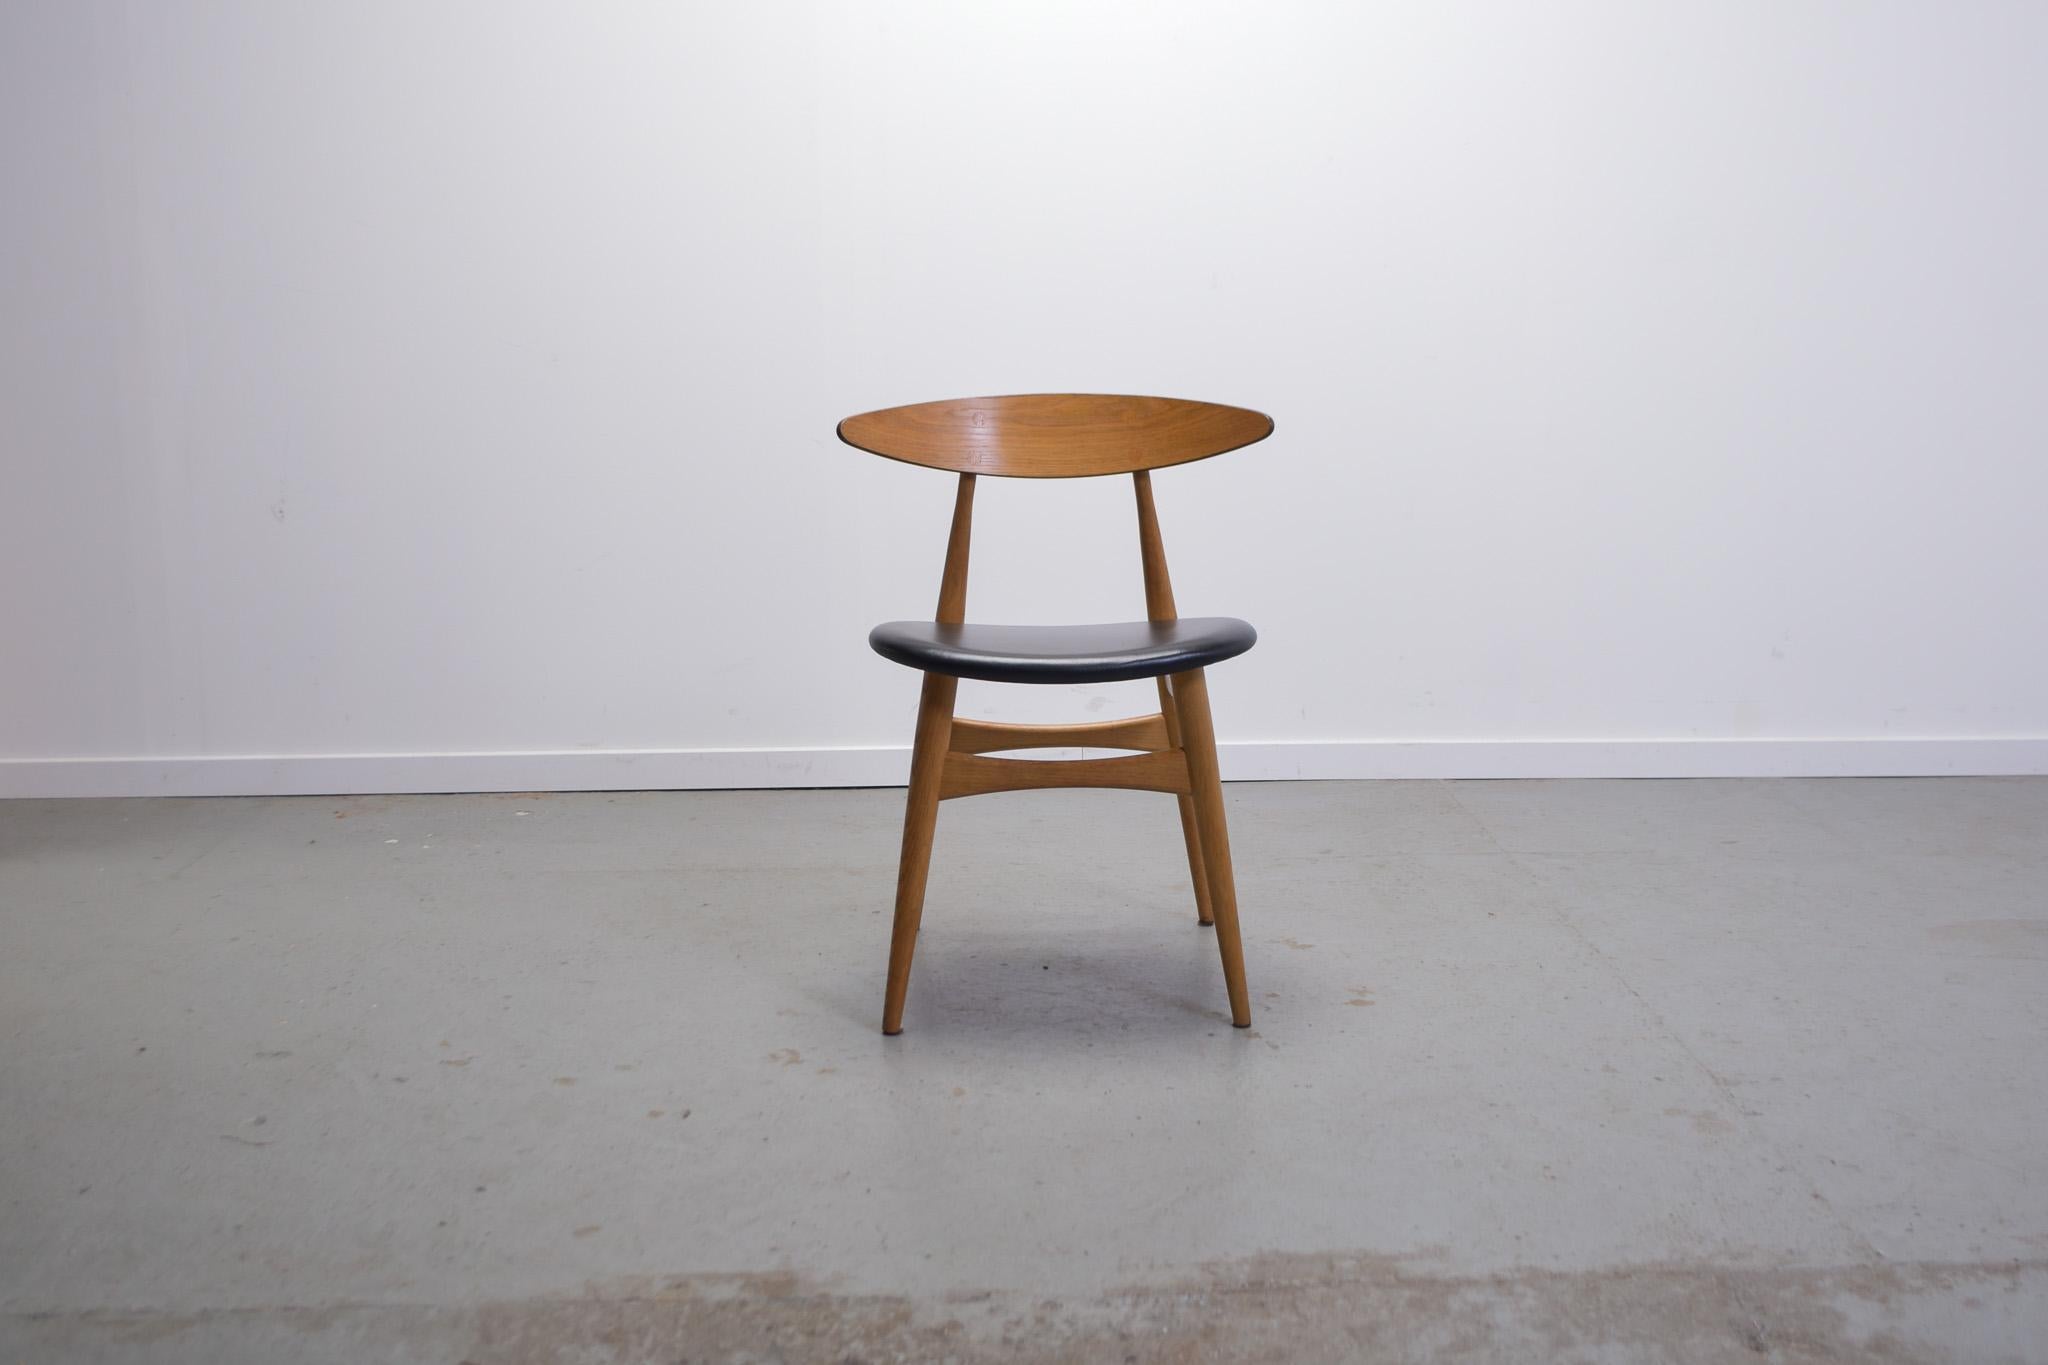 Cherry CH33 dining chairs designed by Hans J. Wegner for Carl Hansen